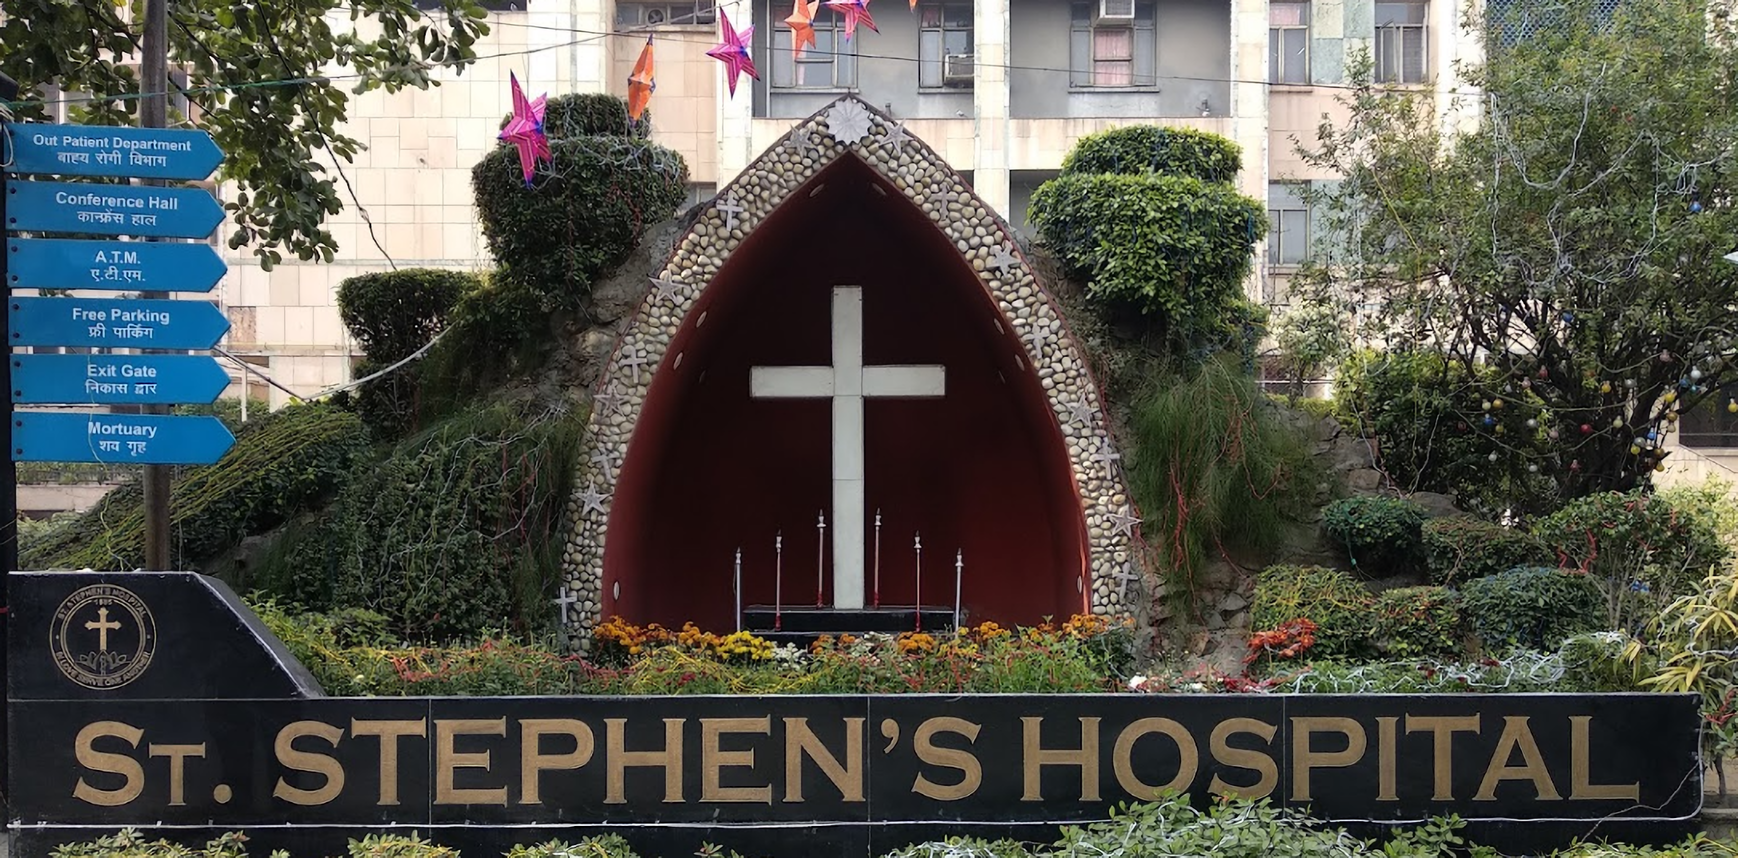 St. Stephen's Hospital photo